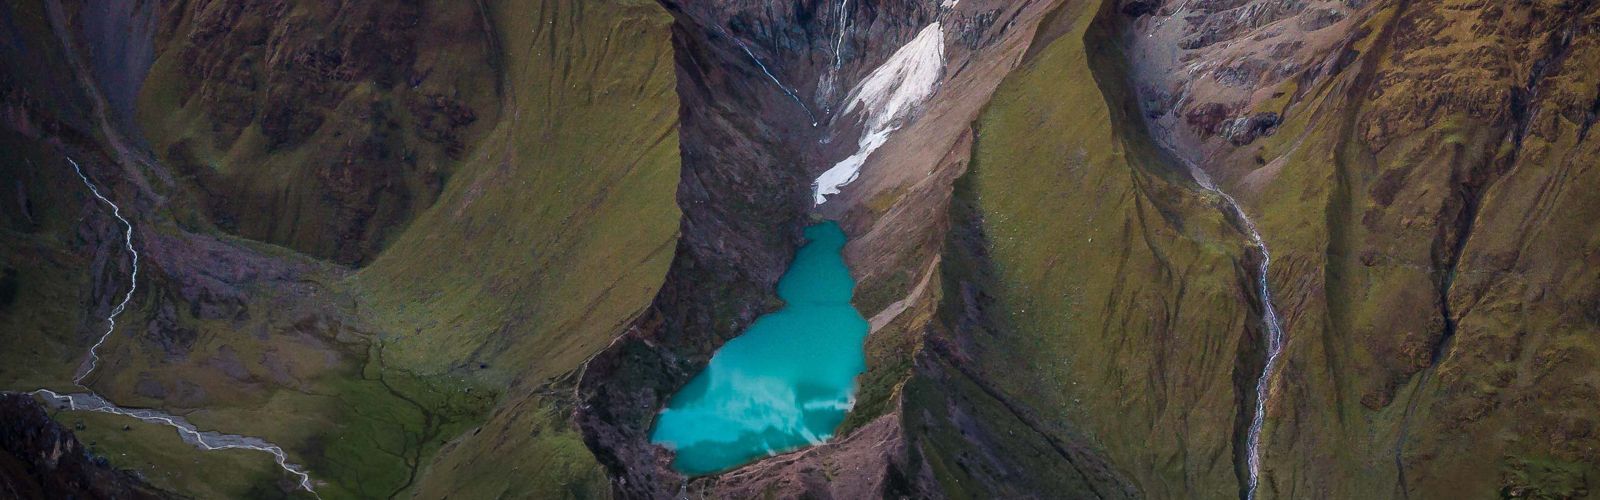 Glacier runoff from Nevado Salcantay feeding Laguna Humantay and the surrounding rivers. Taken in December 2018 near Cusco, Peru